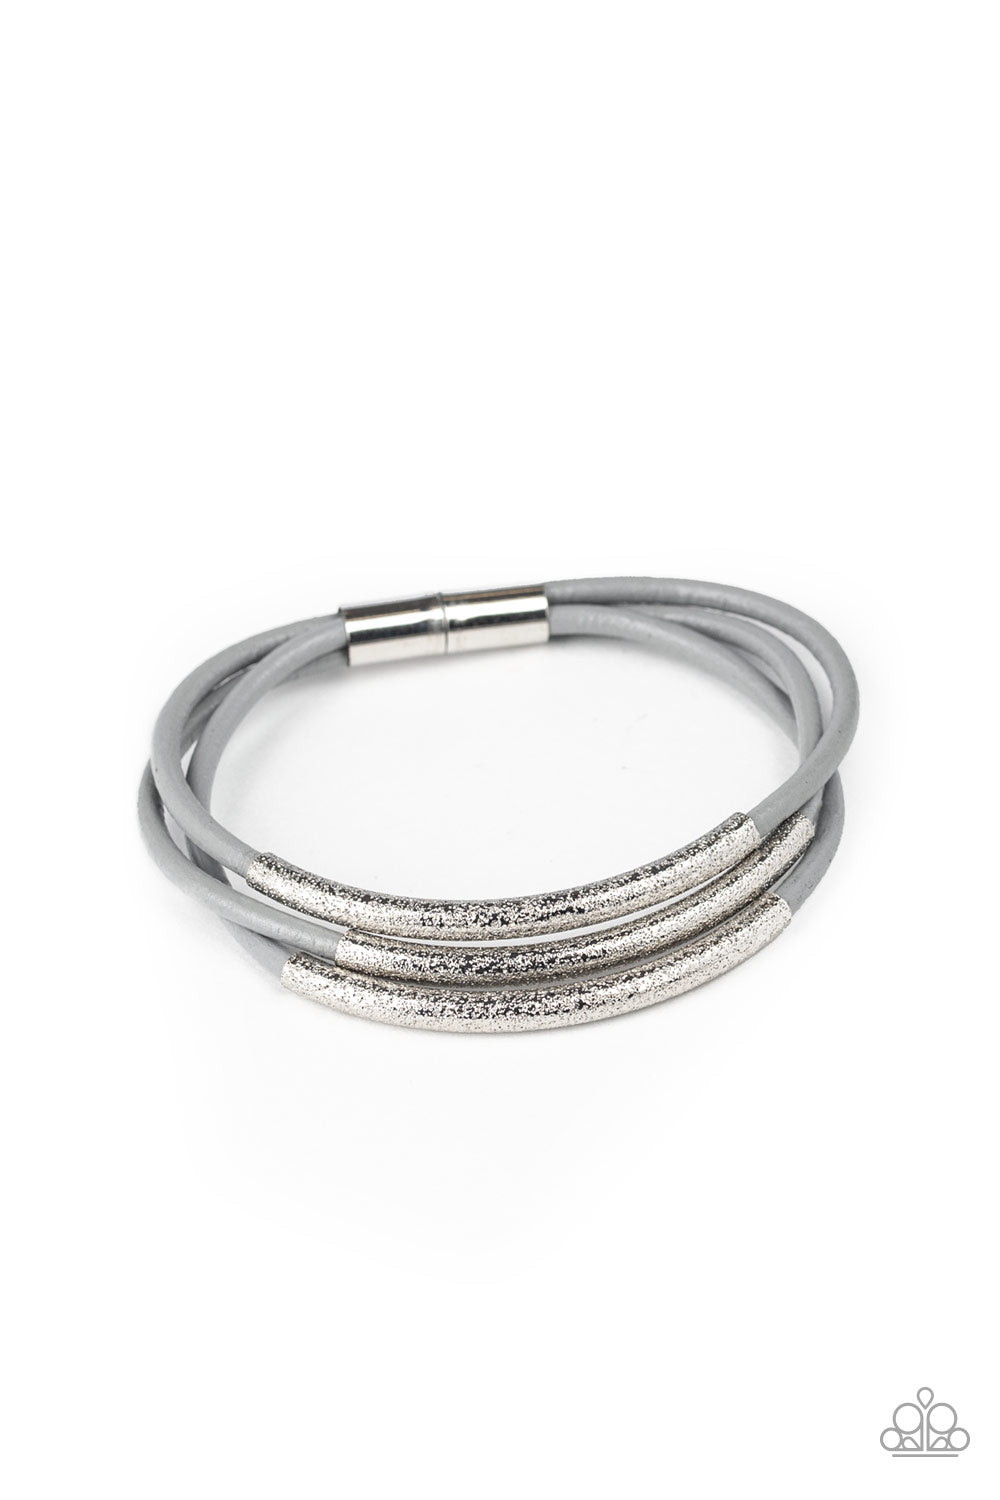 Paparazzi Magnetic Maverick - Silver - Magnetic Closure Bracelet - $5 Jewelry with Ashley Swint